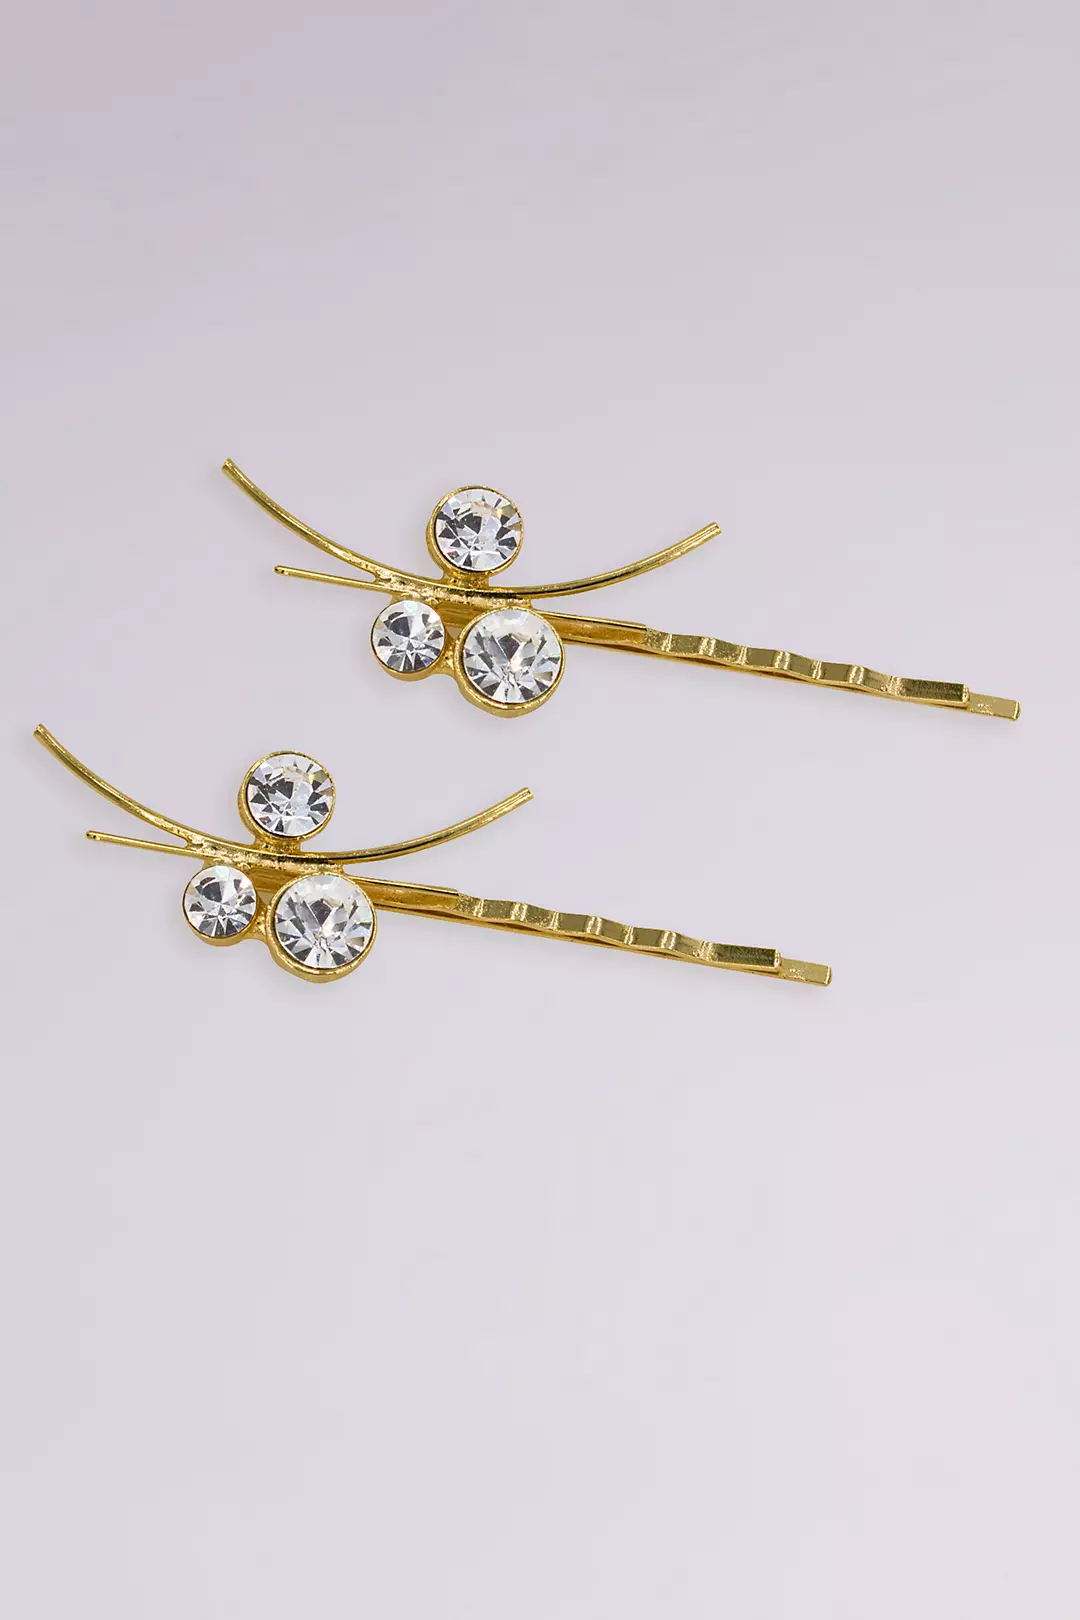 Swarovski Crystal Grecian Inspired Bobby Pin Set Image